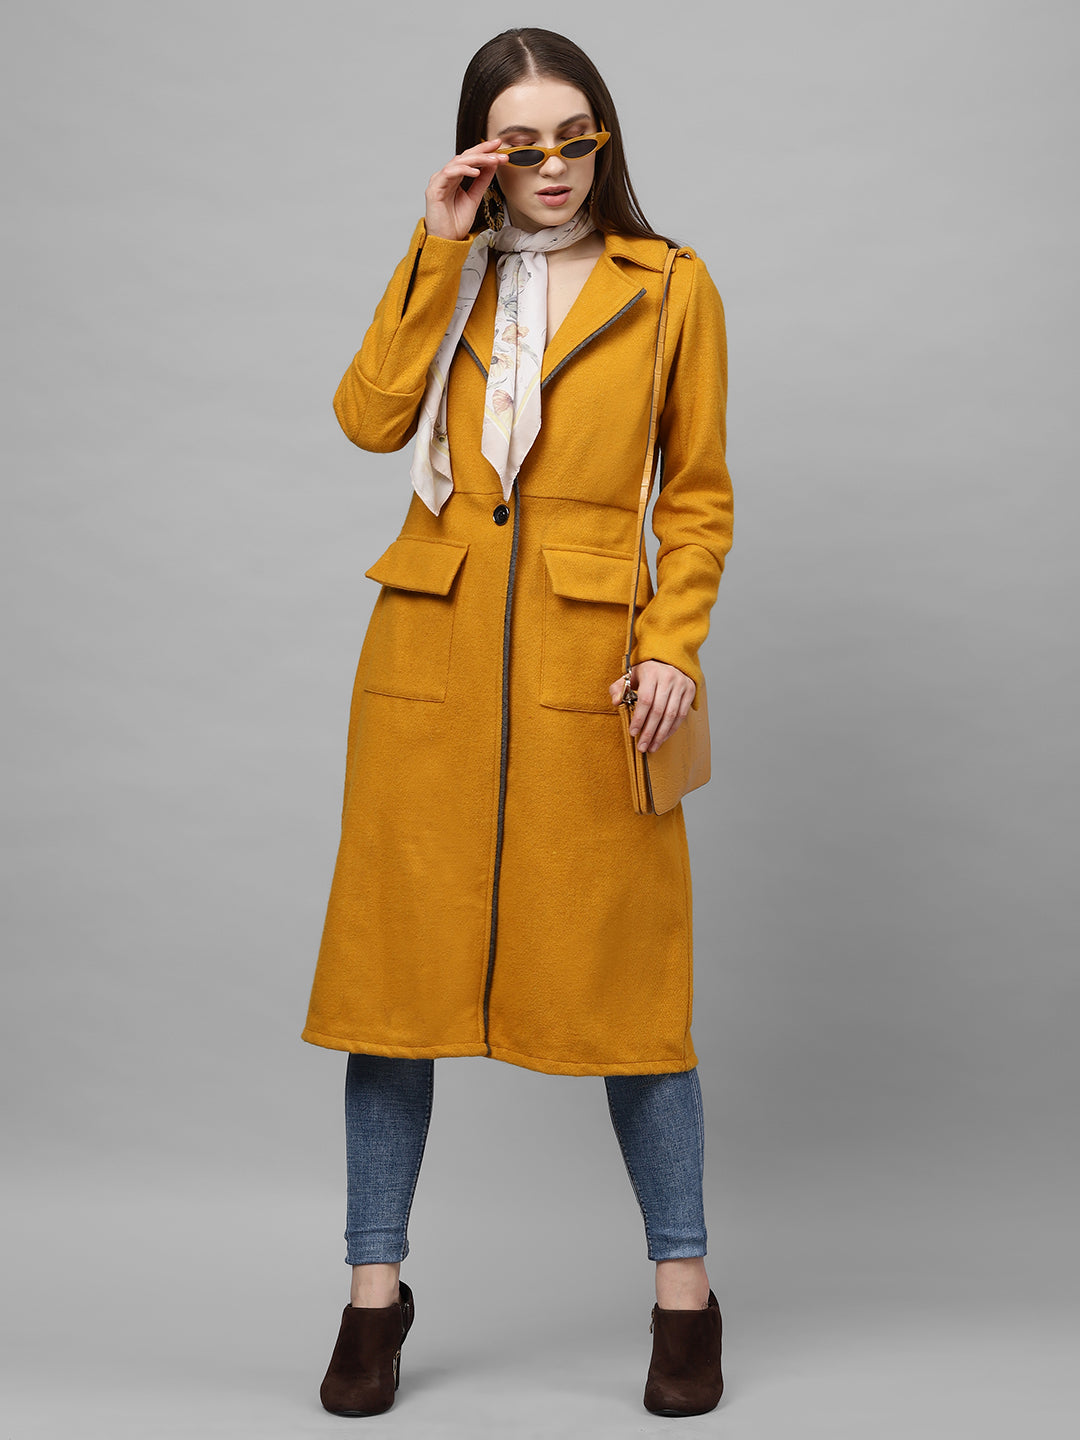 Athena Women Mustard Yellow Solid Longline Overcoat - Athena Lifestyle